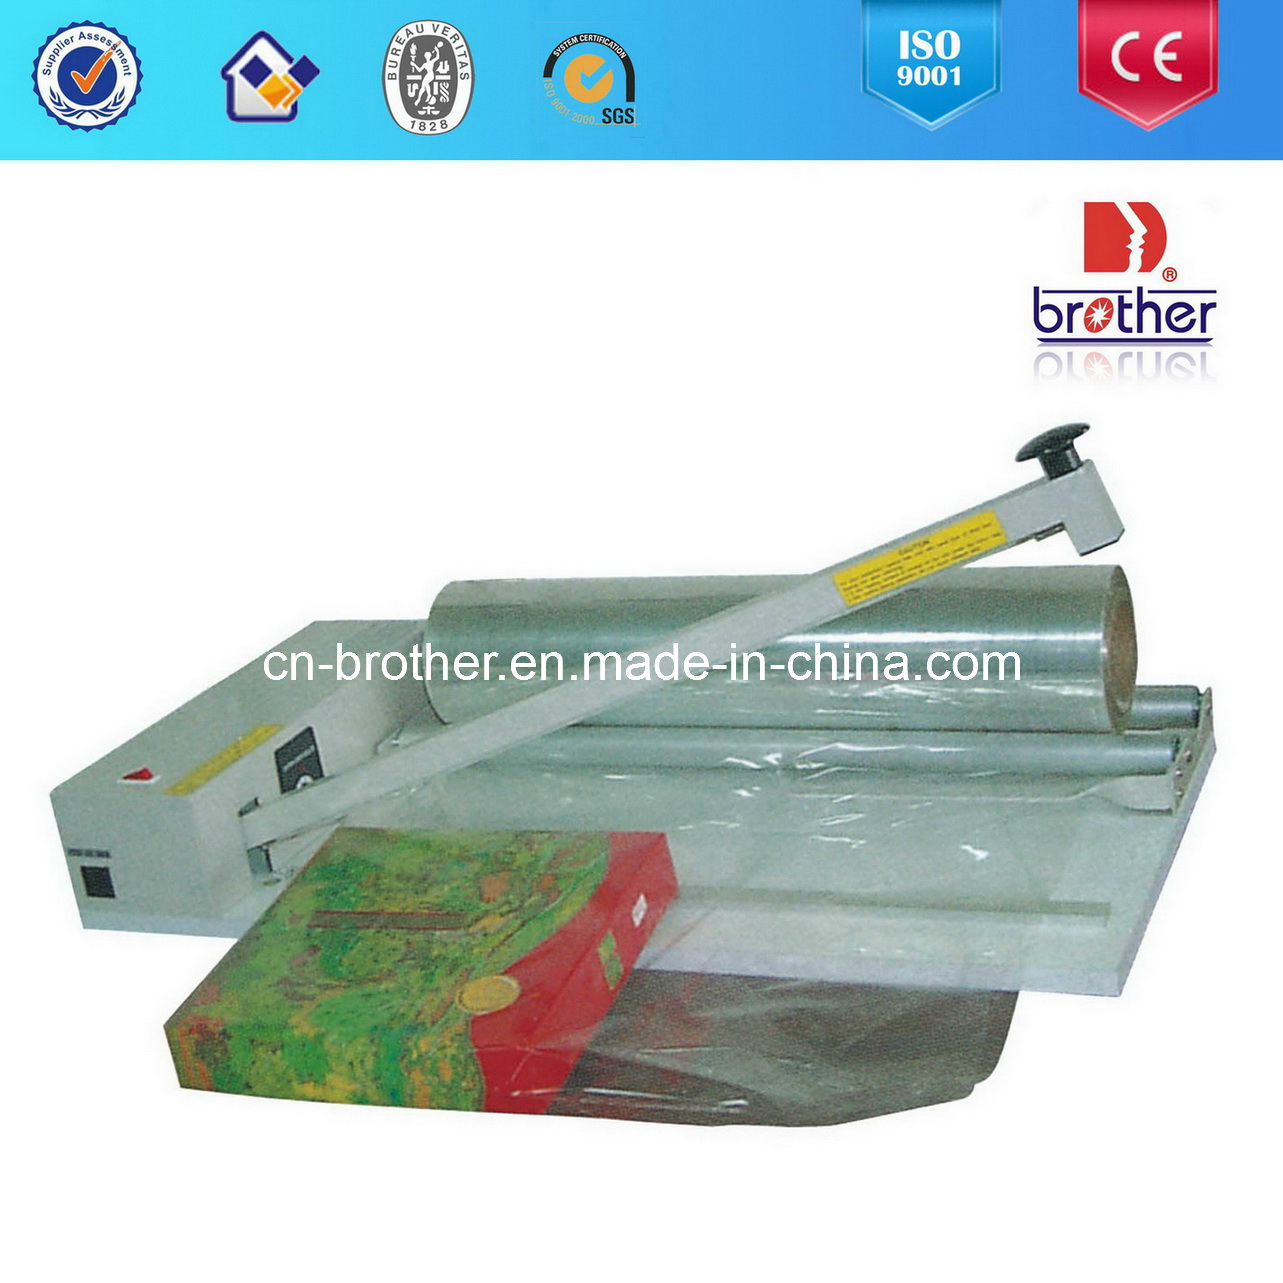 Plastic Bag Manual Sealing and Cutting Machine